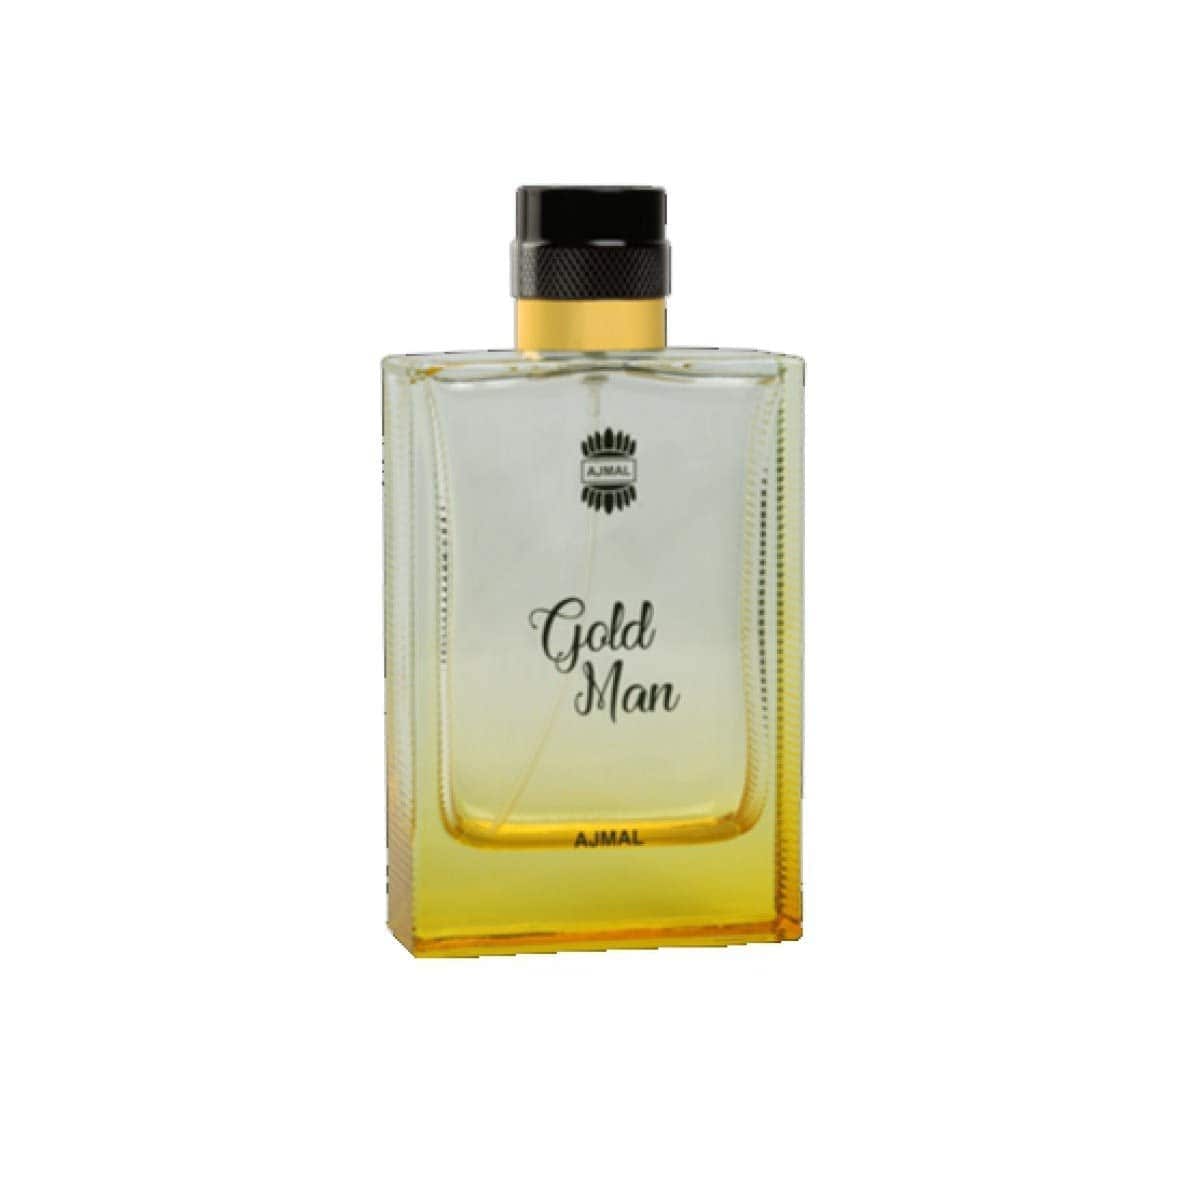 Gold Man EDP - Eau De Parfum 100 ML (3.4 oz) by Ajmal Perfumes - Intense oud